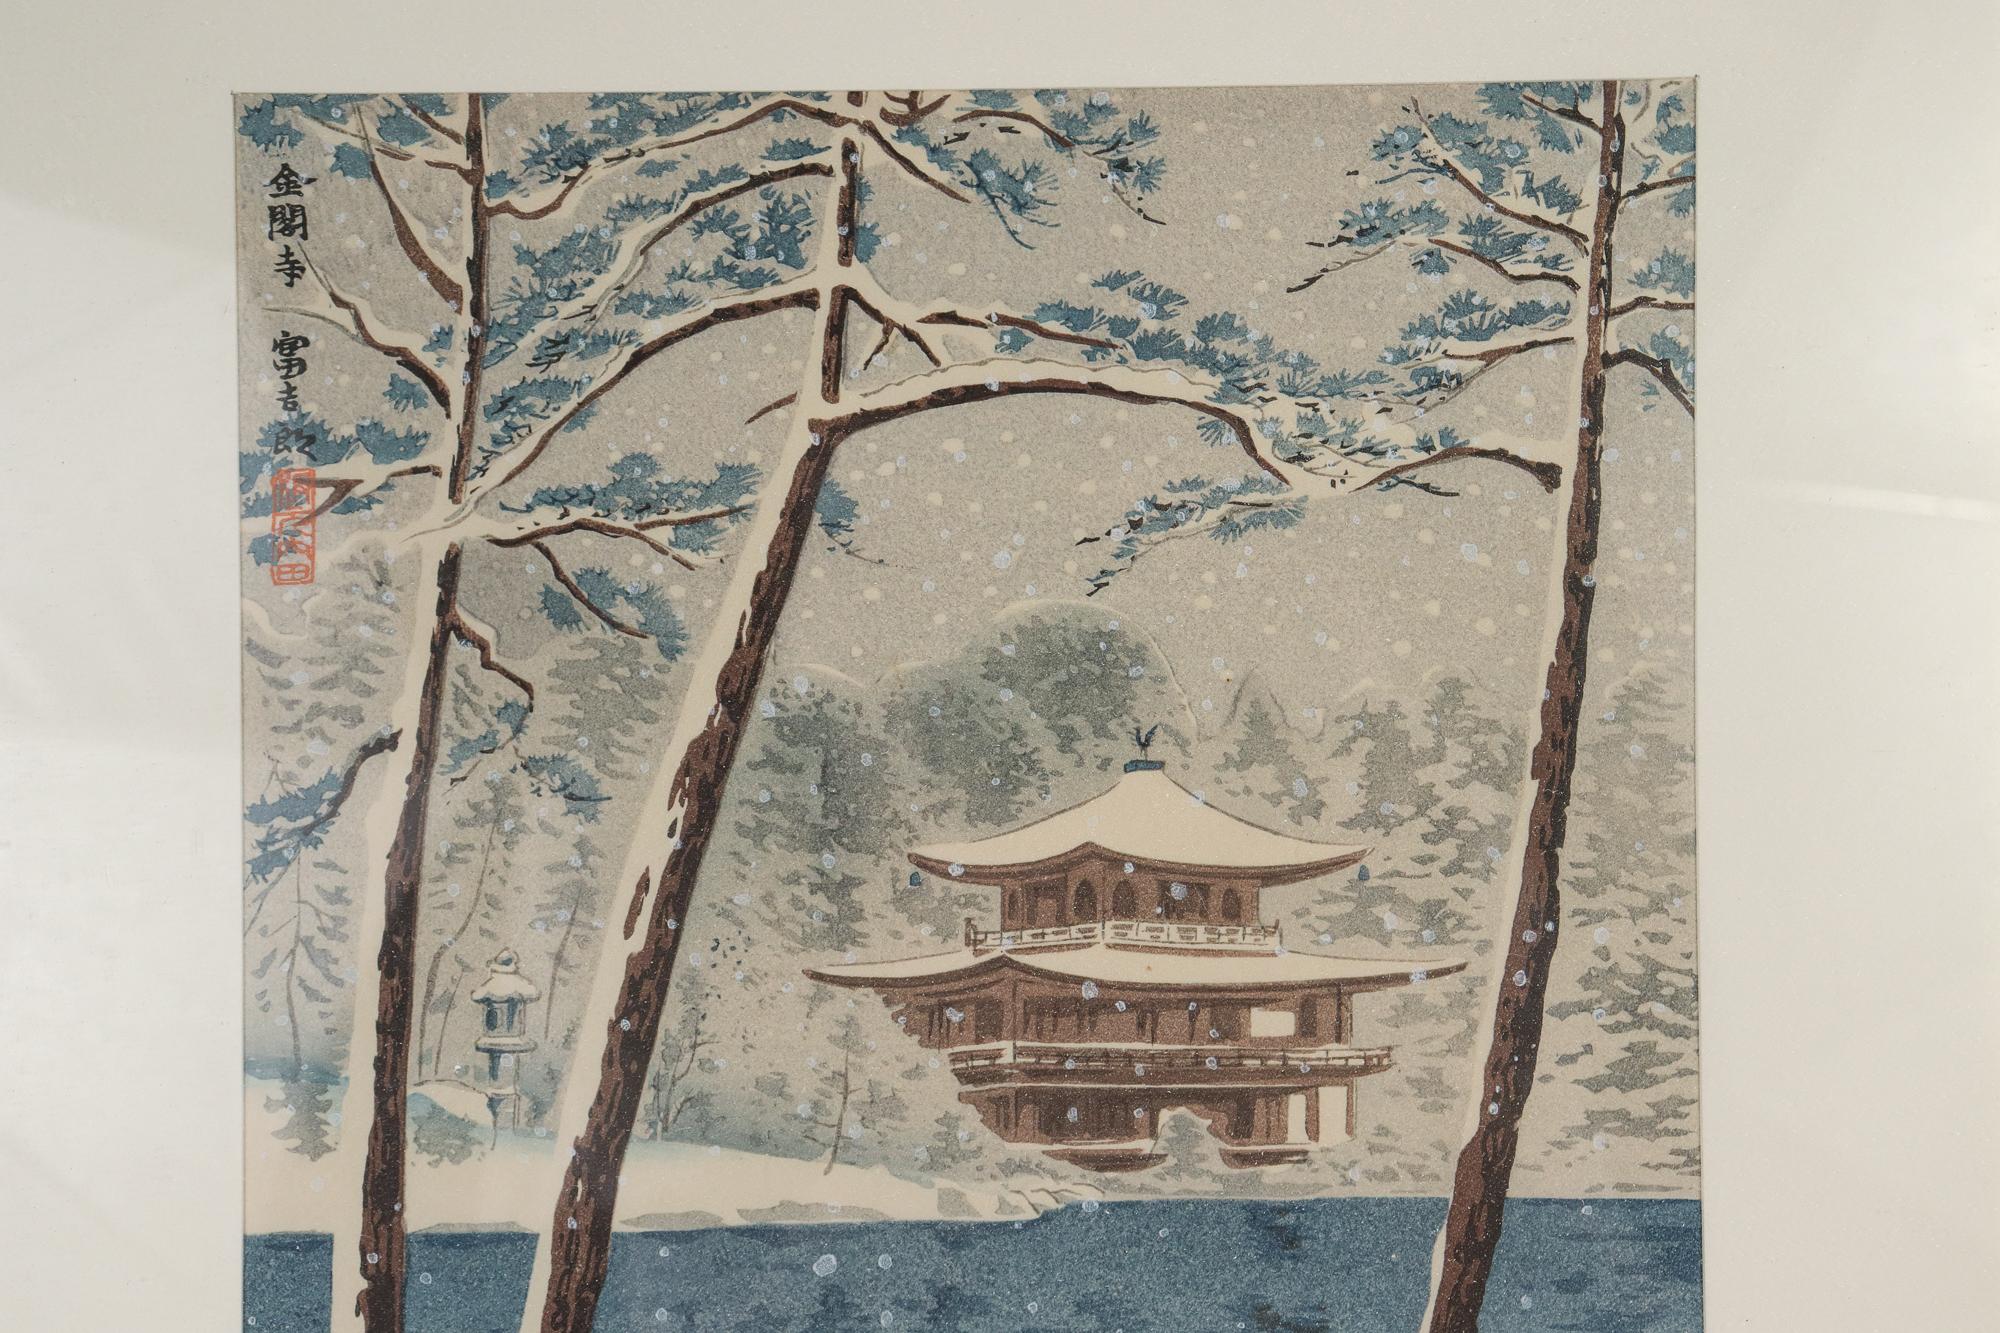 Vintage Japanese Ukiyo-e Print of Kinkaku-ji in Snow by Tokuriki Tomikichiro In Good Condition For Sale In Philadelphia, PA